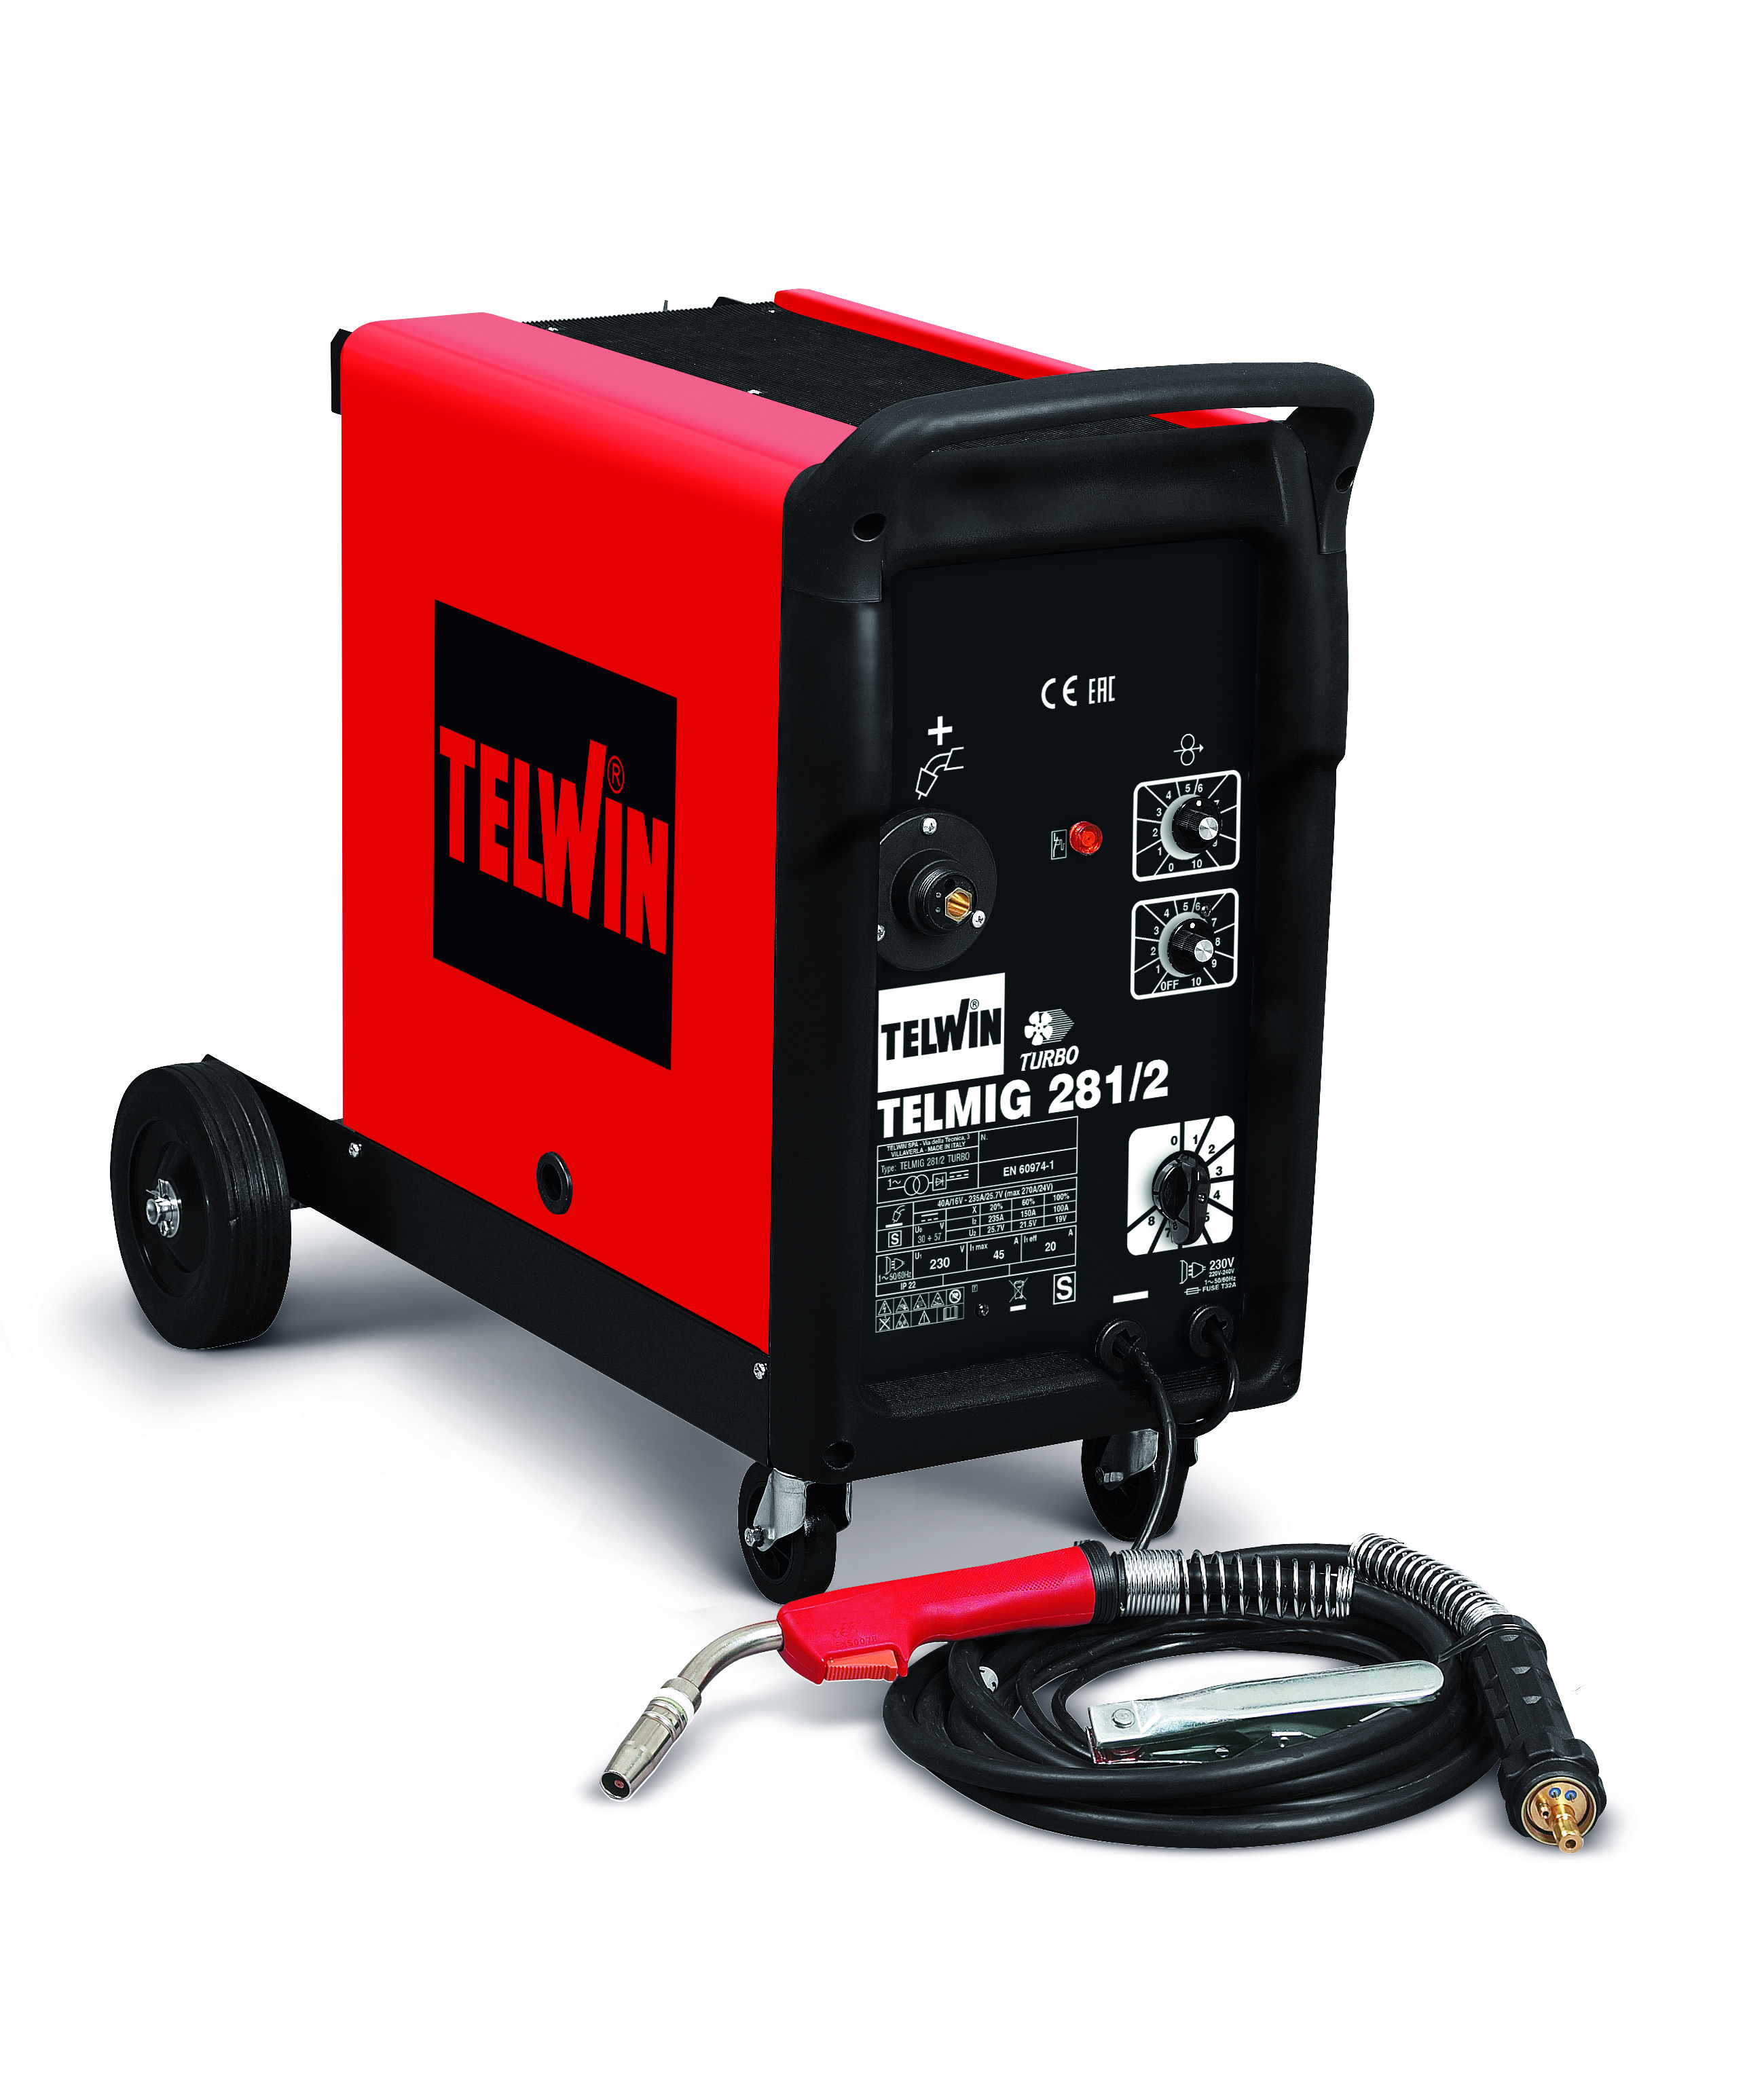 TELWIN 820099 - TELMIG 281/2 TURBO 230V, MIG-MAG welding machine, P-Max(9.5kW)